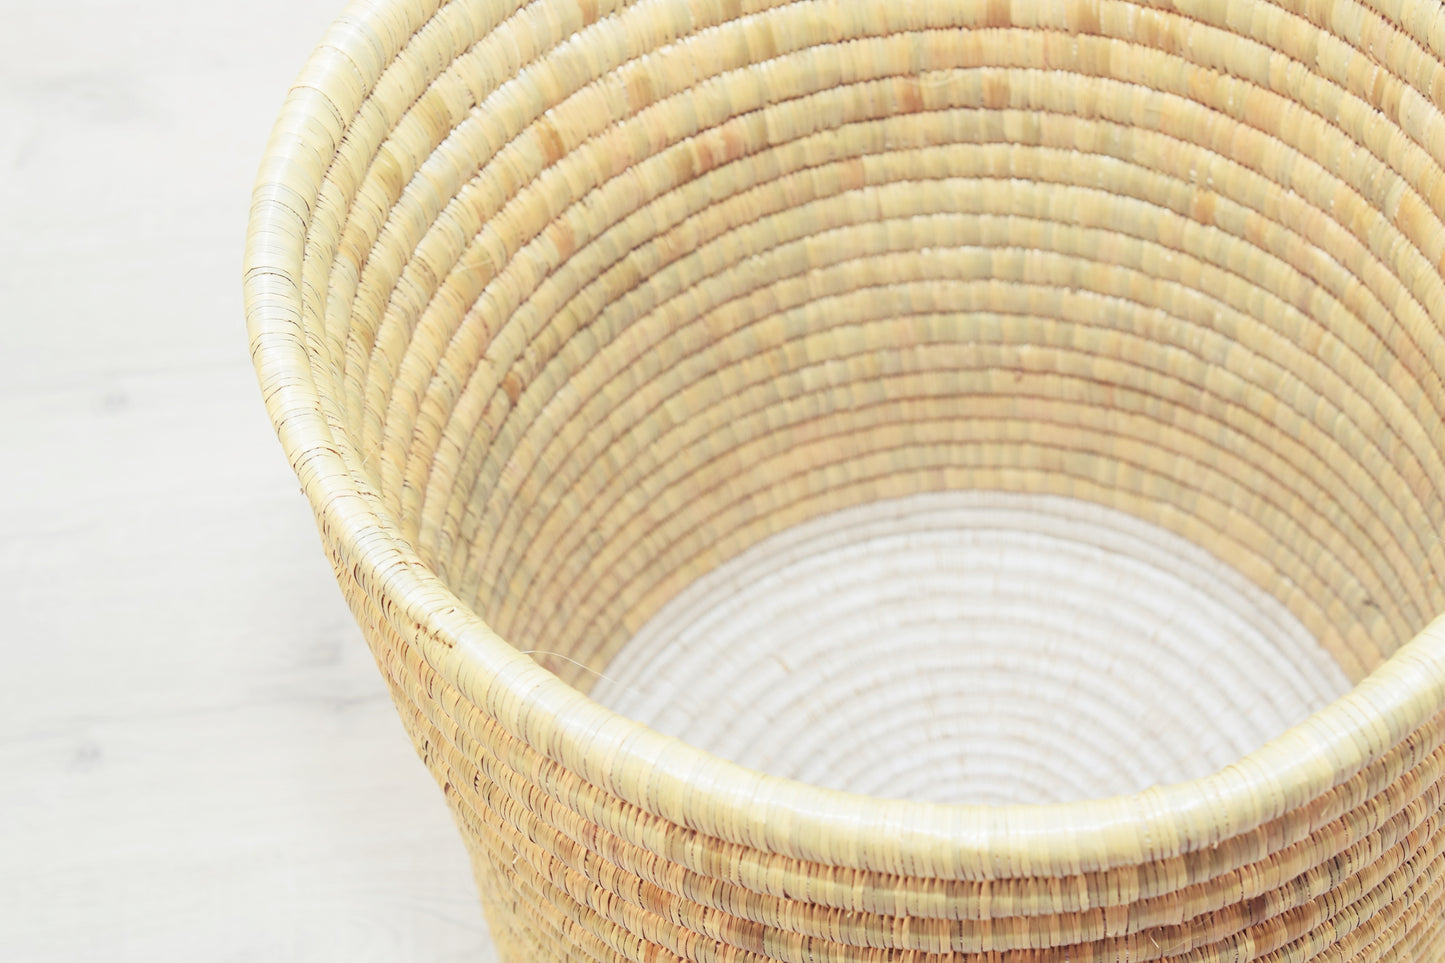 Katakuru Woven Storage Baskets (4 Sizes)